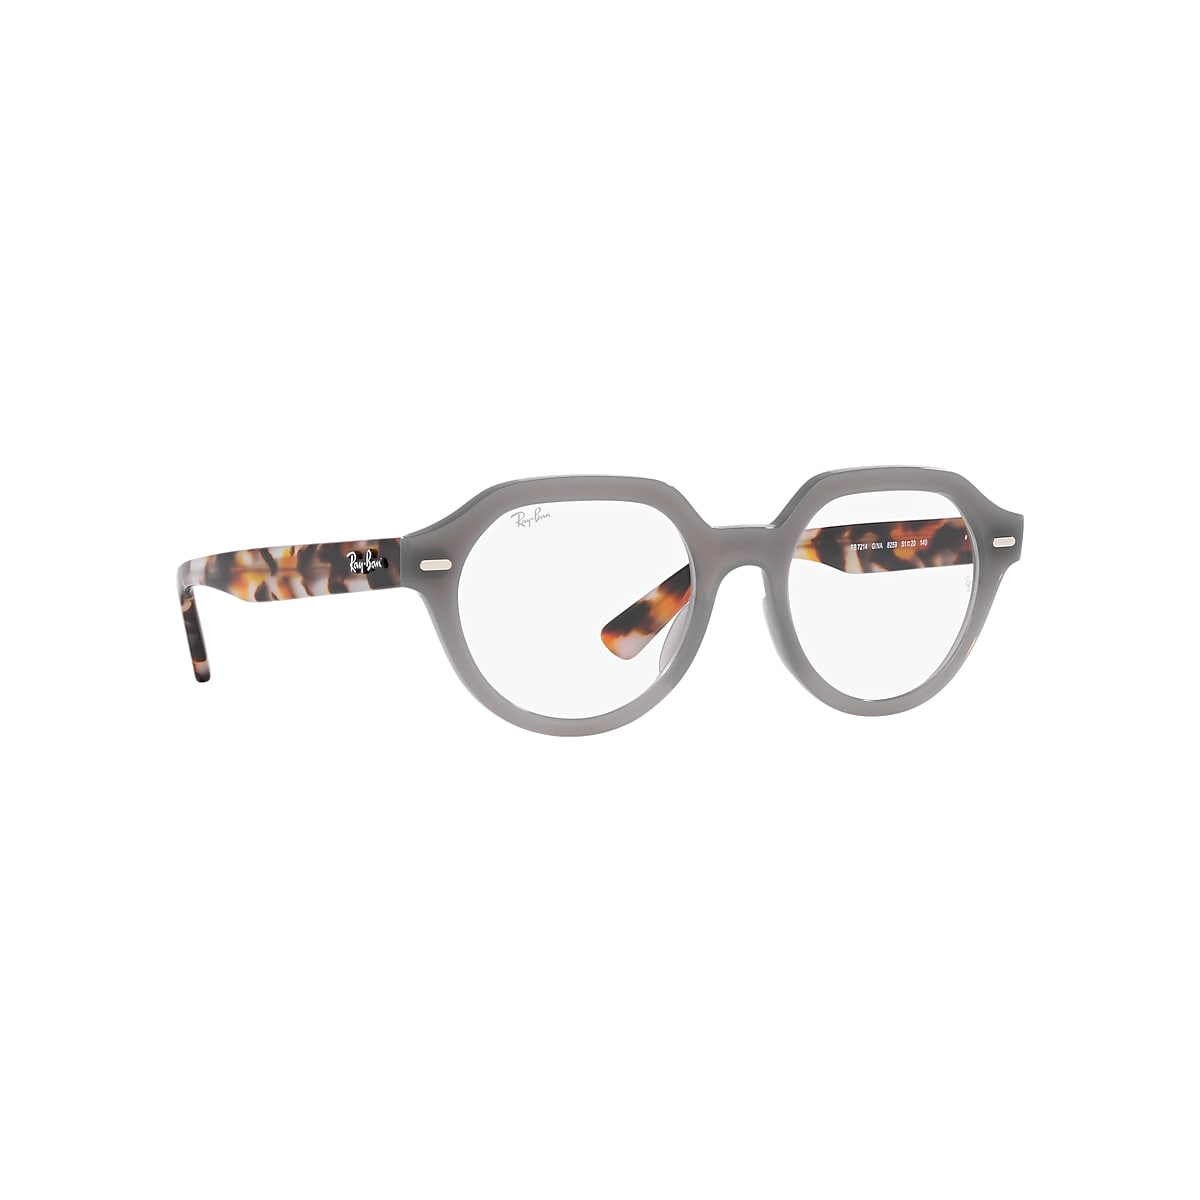 GINA OPTICS Eyeglasses with Opal Grey Frame - RB7214 - Ray-Ban